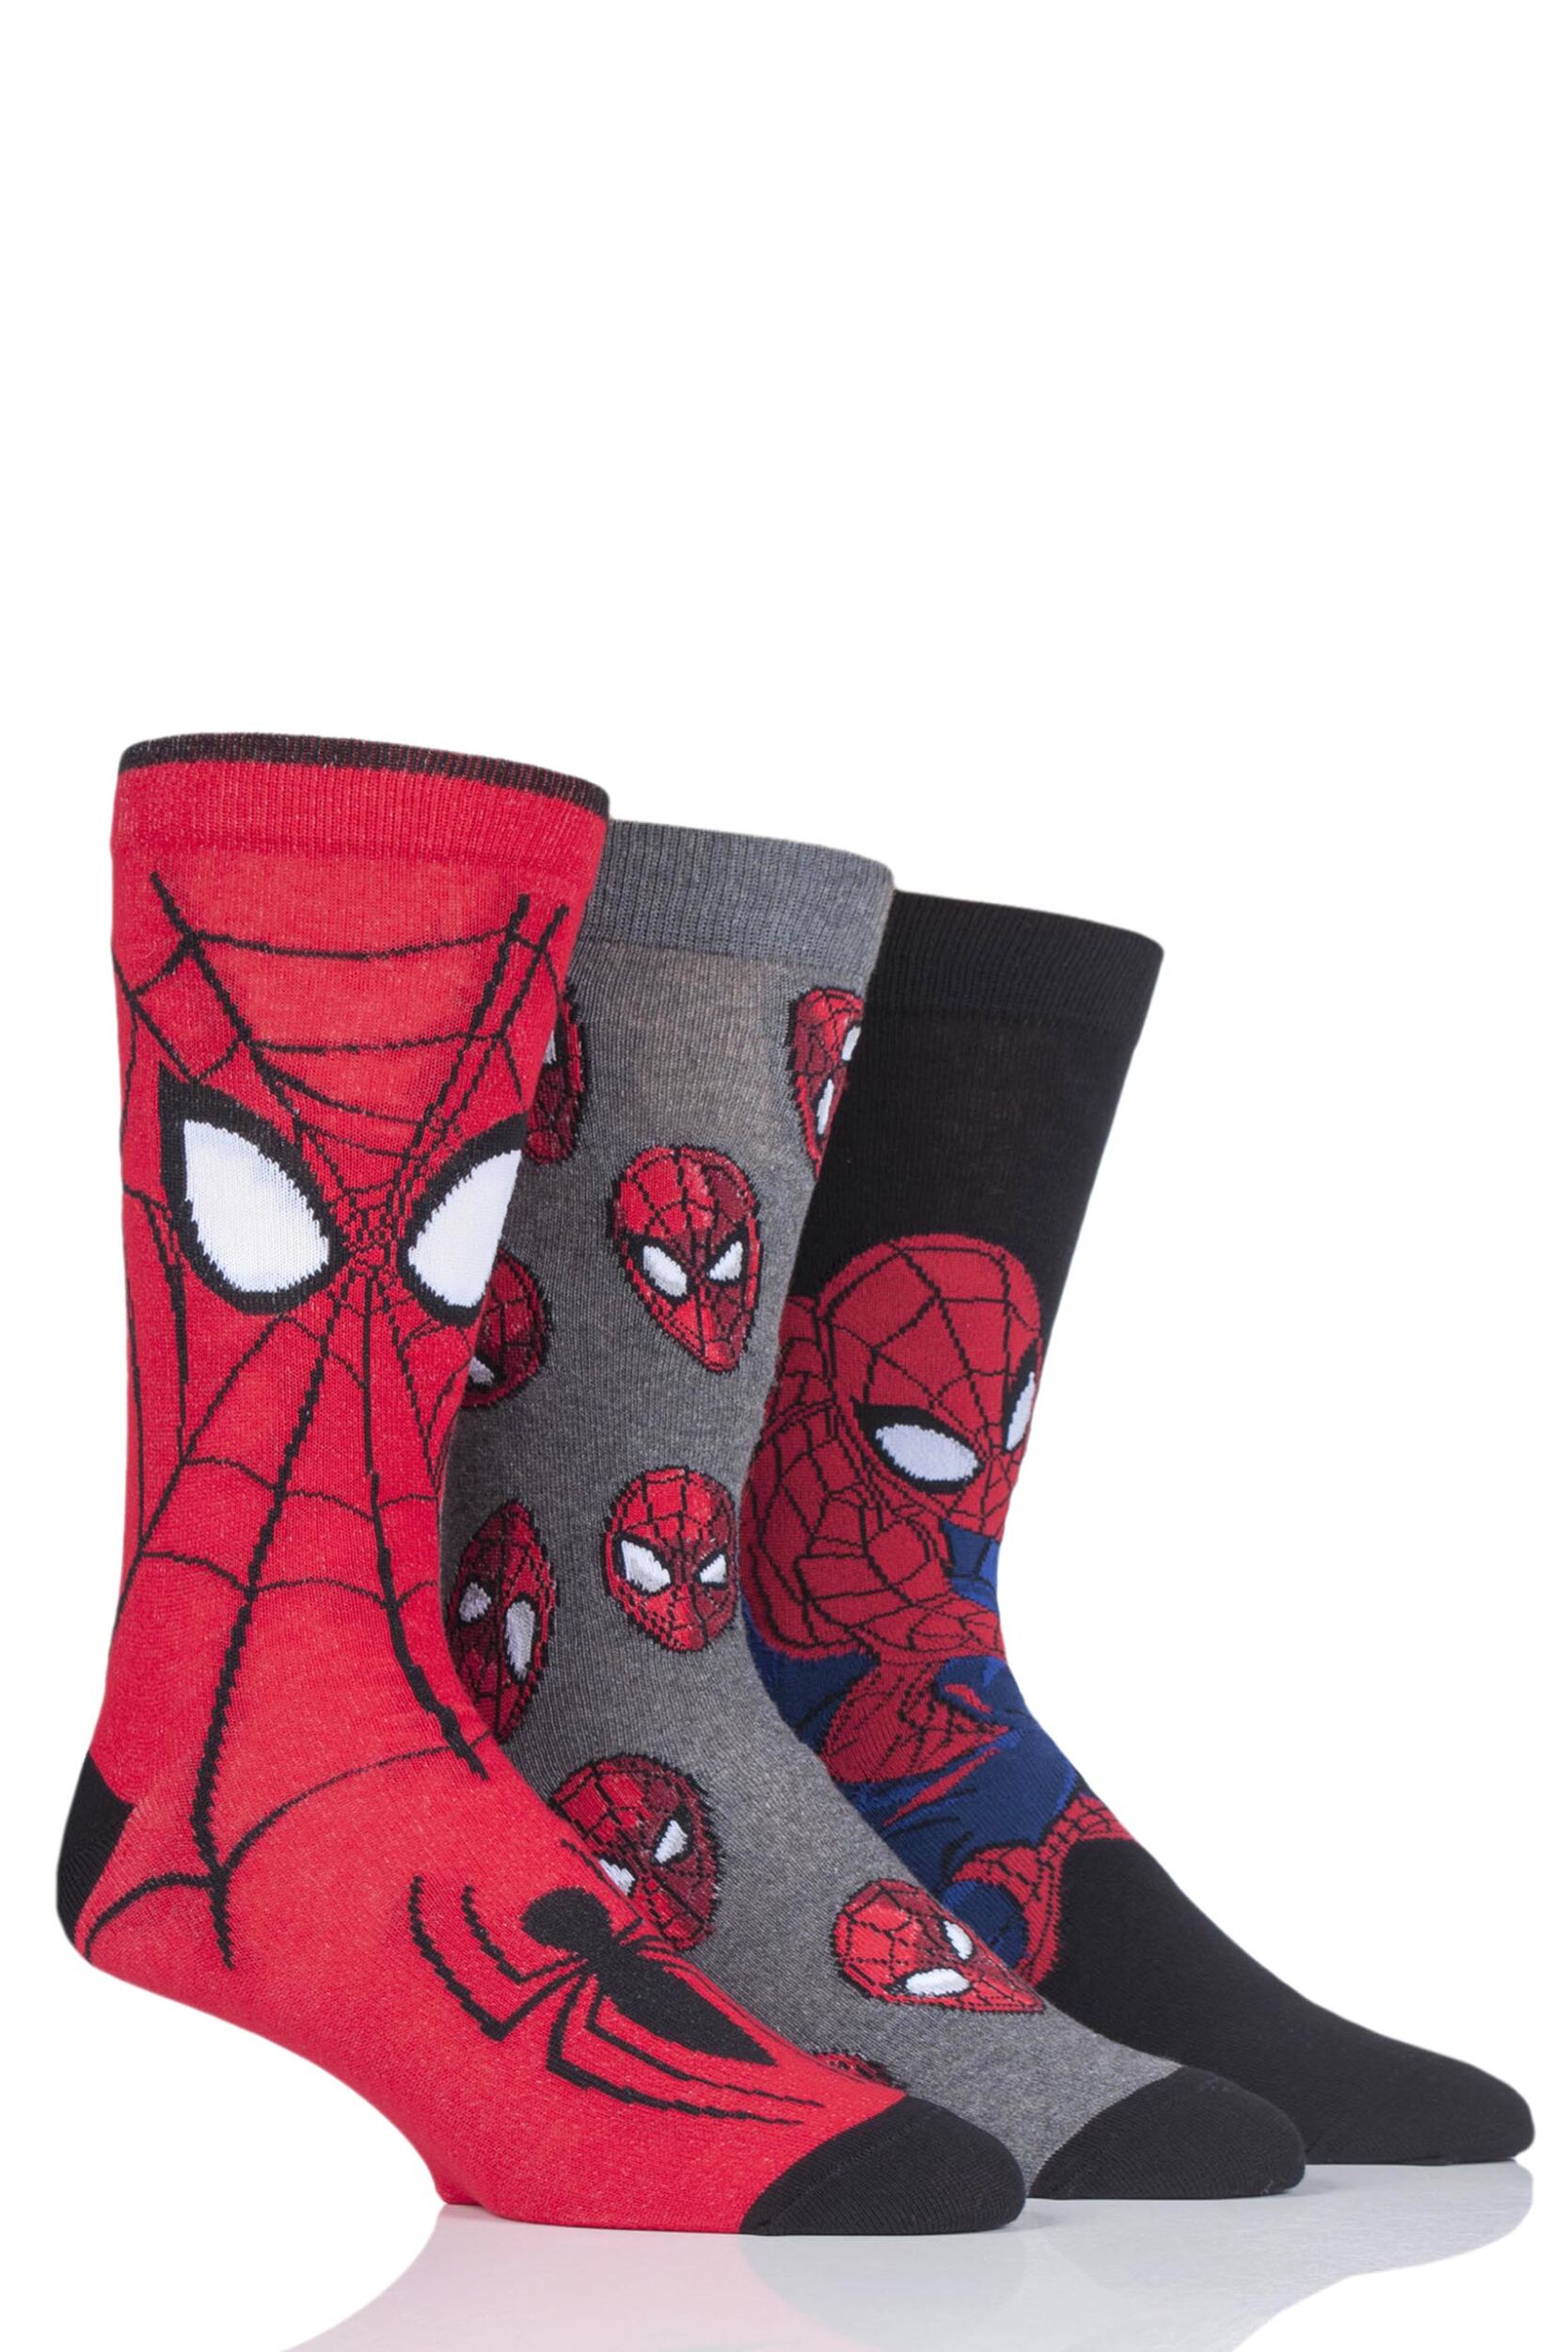 3 Pair Assorted Marvel Spider-Man Cotton Socks Unisex 6-11 Mens - Film & TV Characters